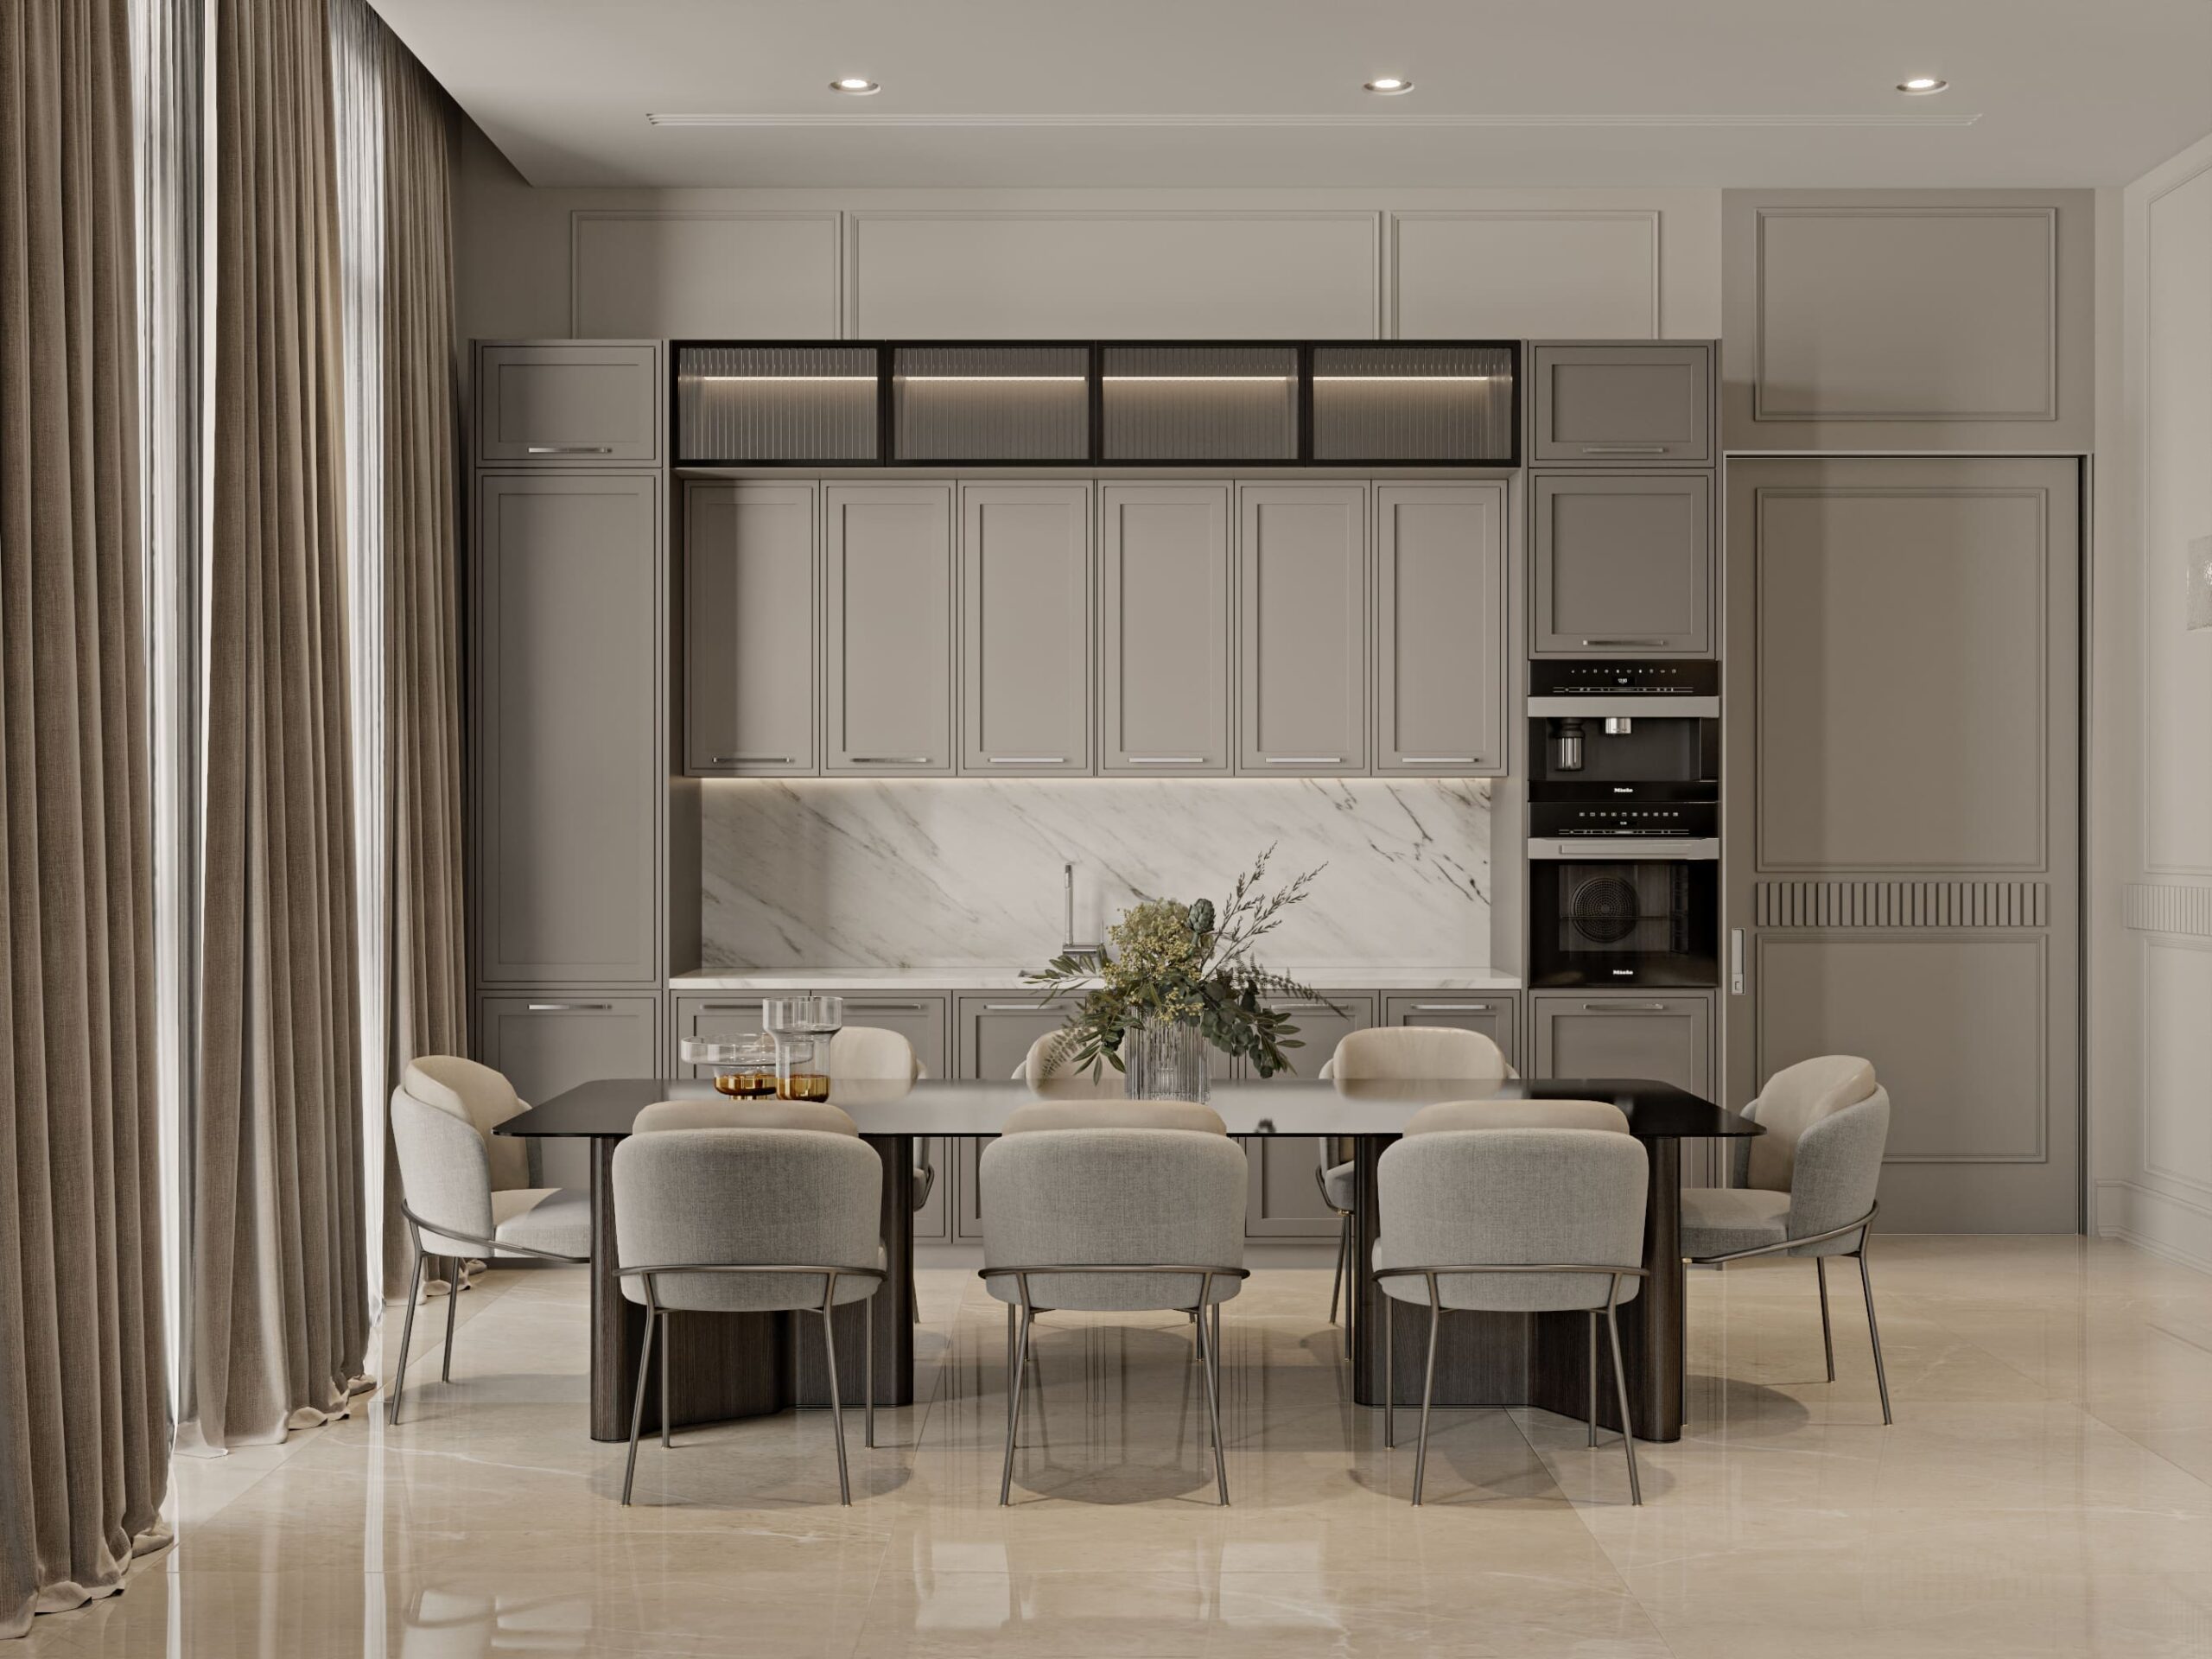 Interior design oth villa jumeirah pearl by kg design family livingroom